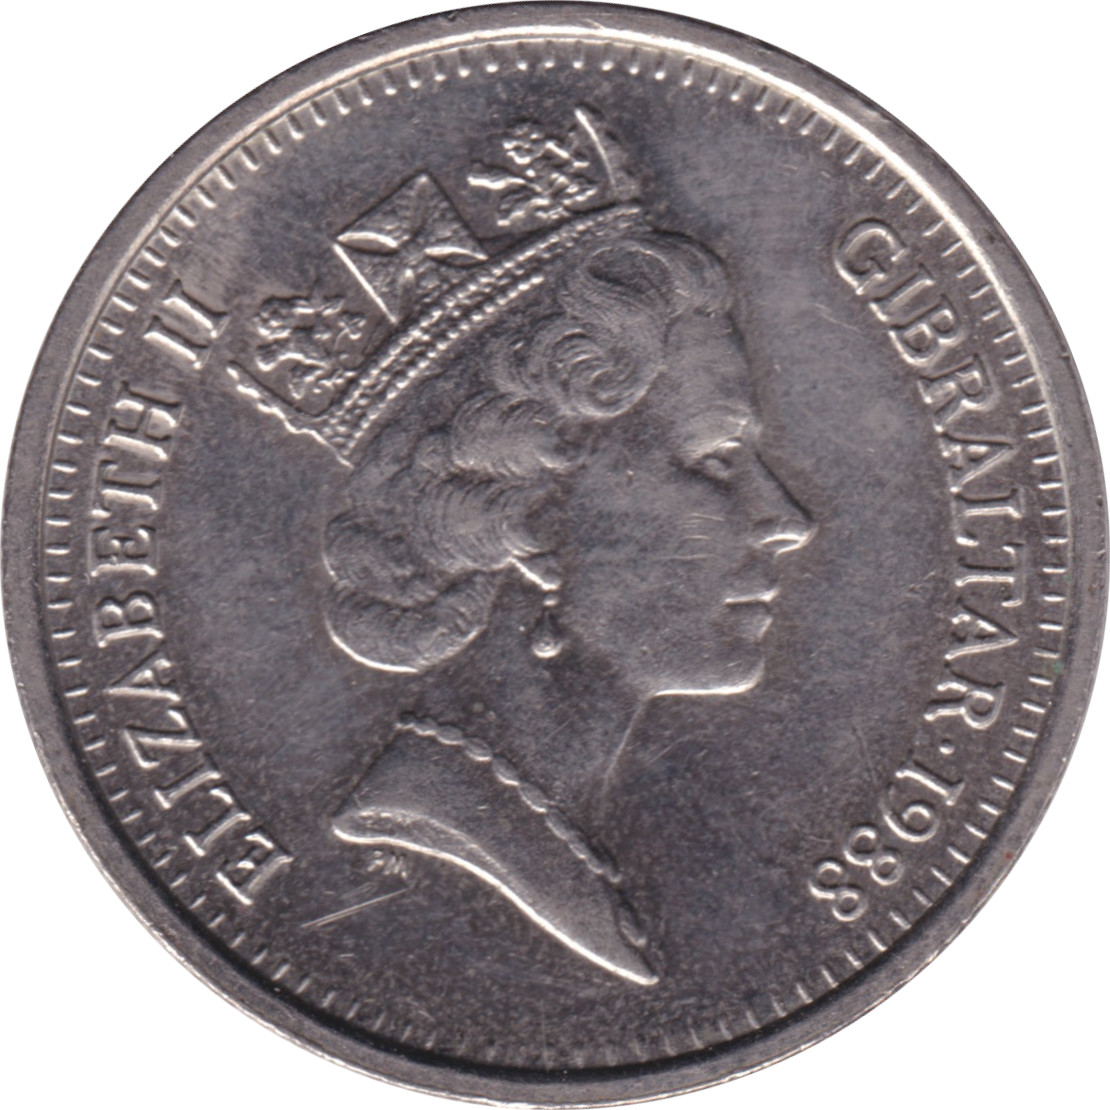 5 pence - Elizabeth II - Tête mature - Type lourd